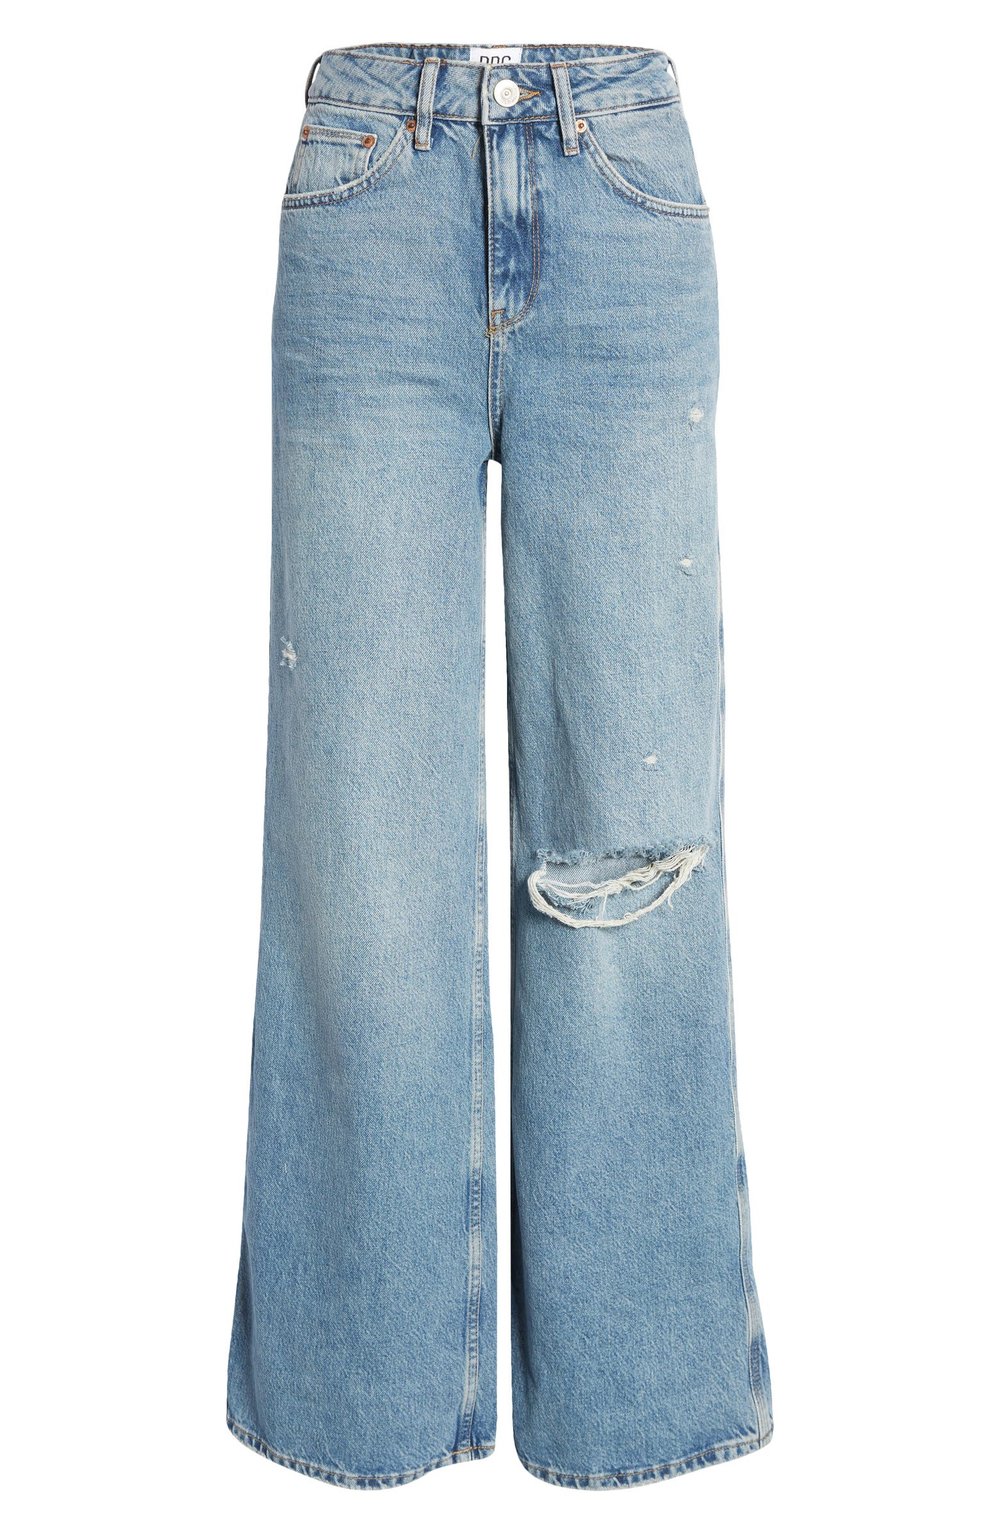 Jeans 1.jpeg